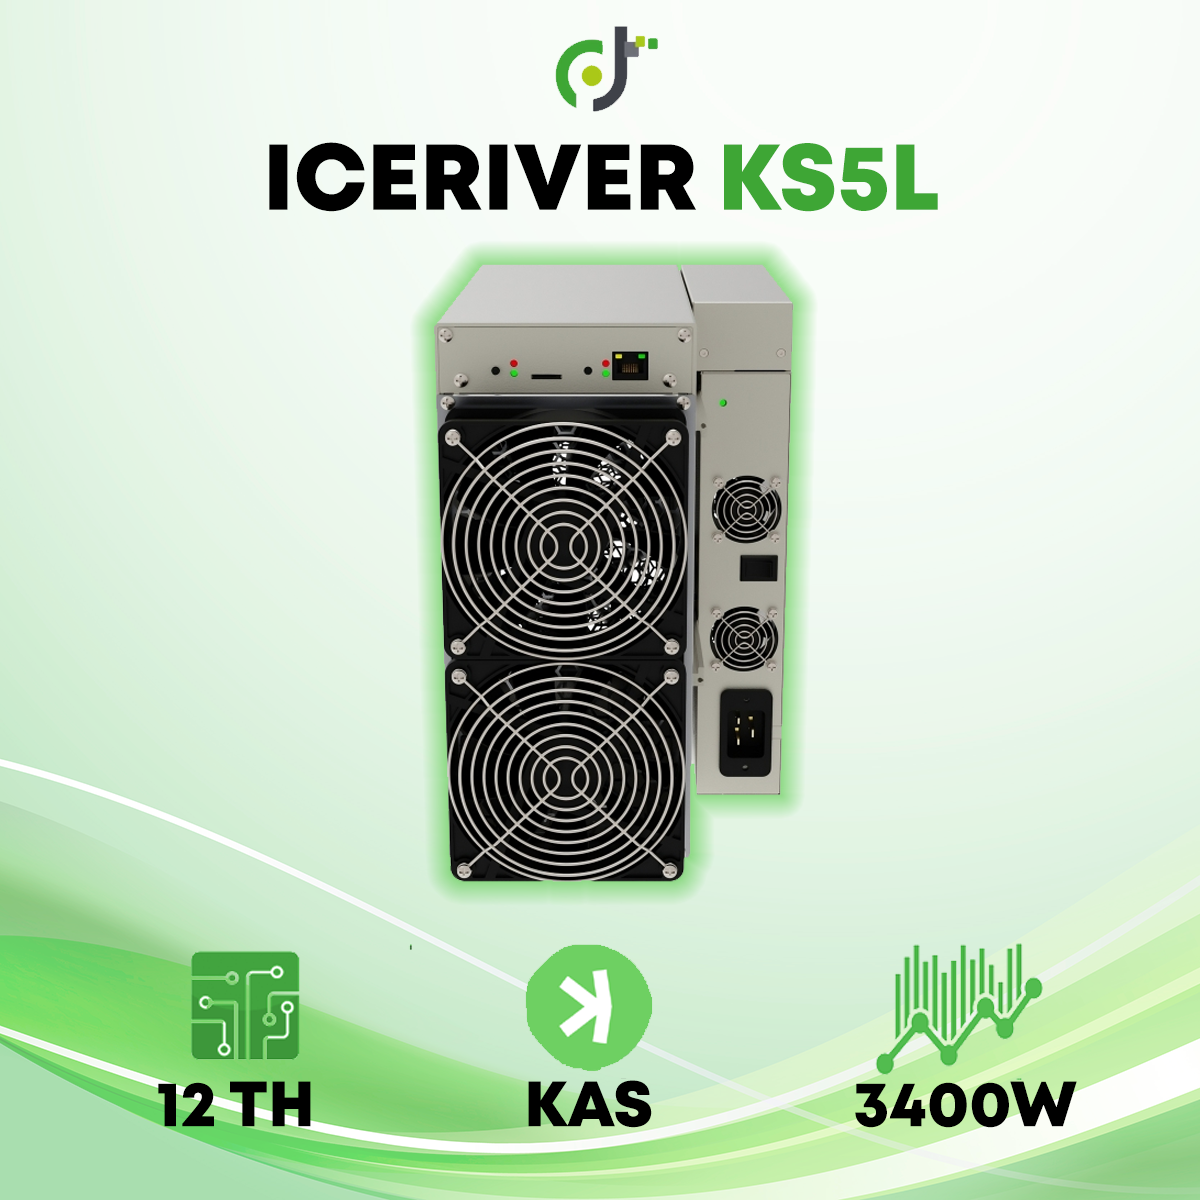 Iceriver KS5L (12TH) KAS Crypto ASIC Miner